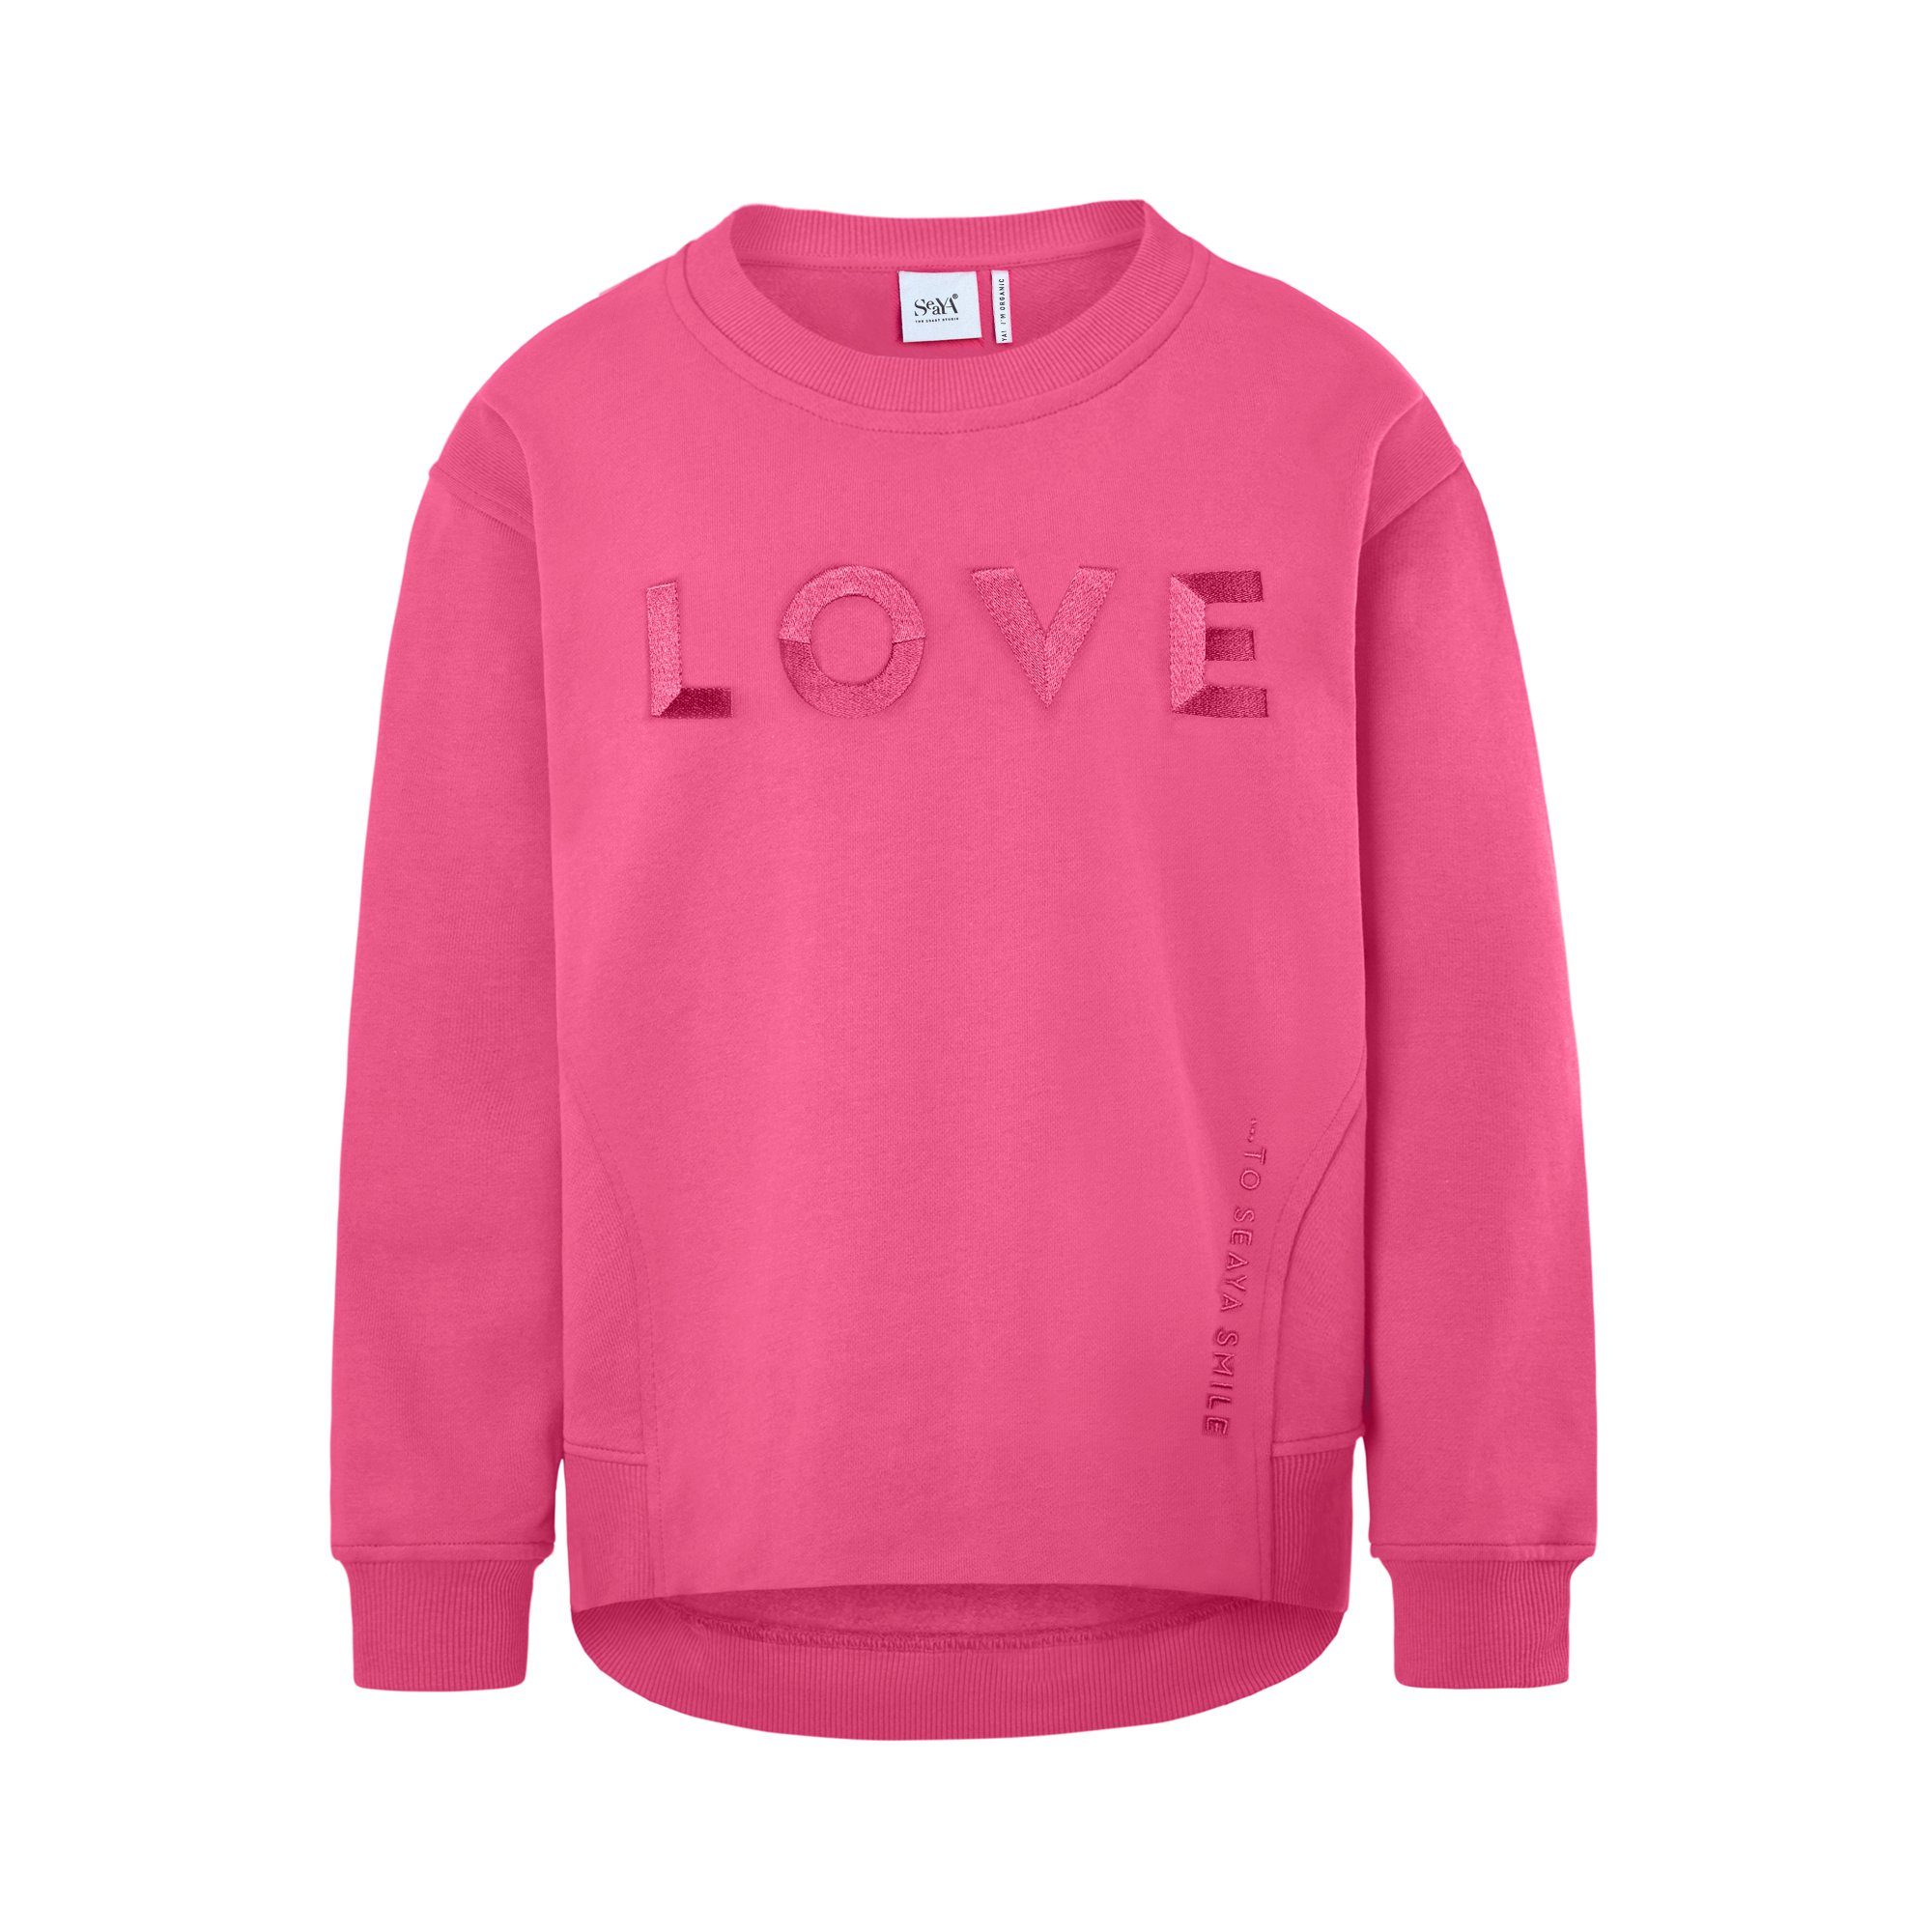 Biobaumwolle pink Sweathose Pink SeaYA Blinky Stickerei Sweatshirt